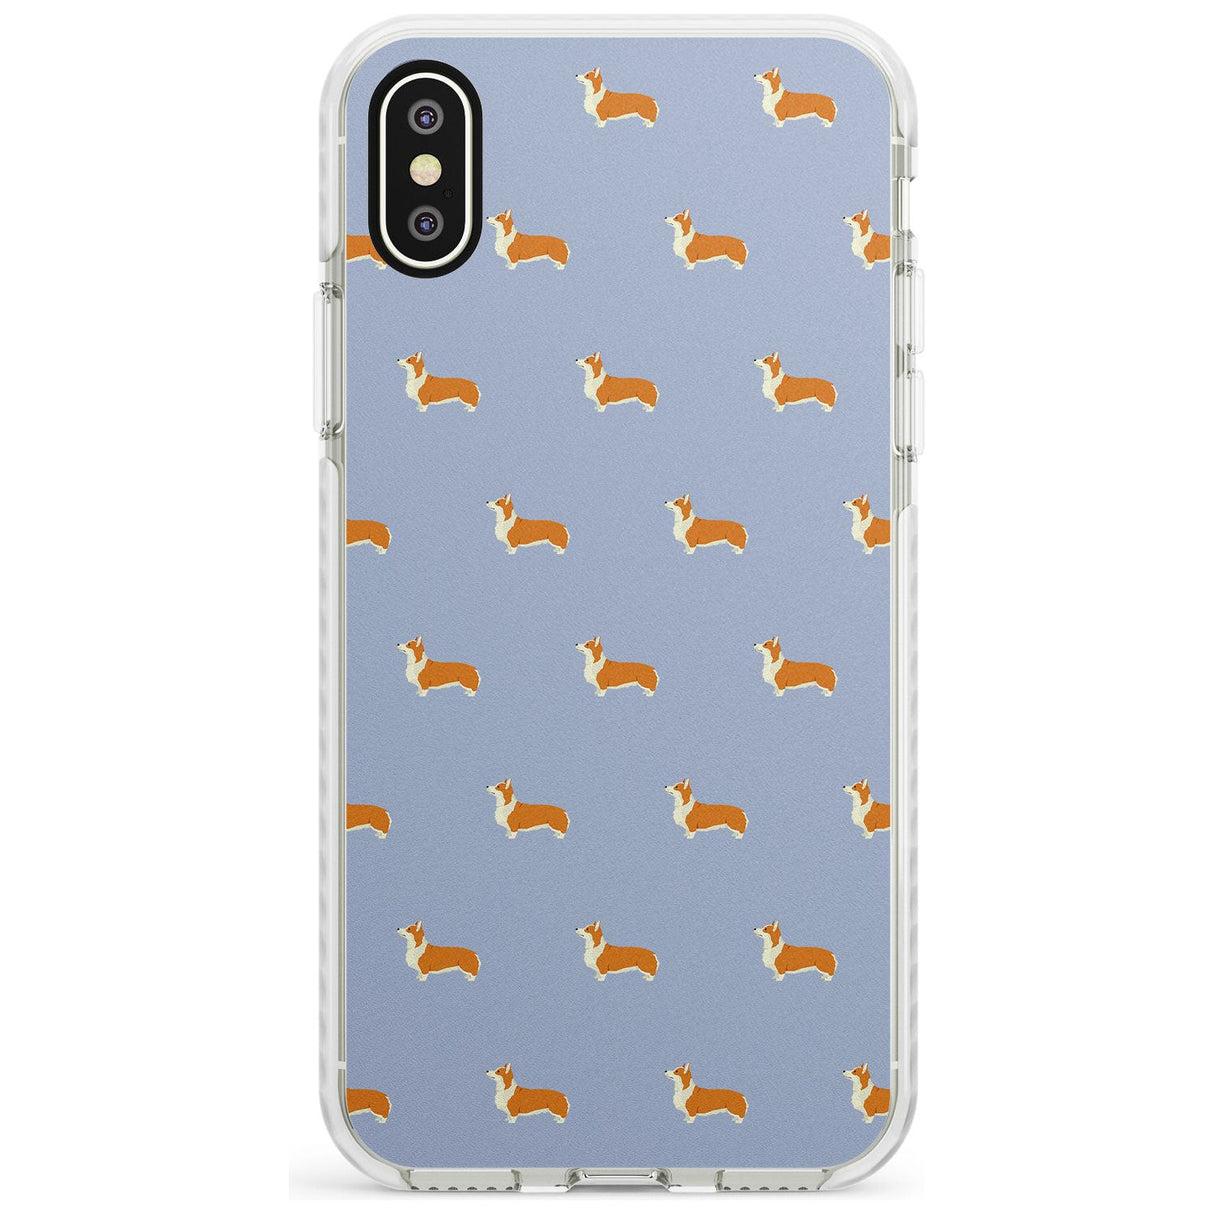 Pembroke Welsh Corgi Dog Pattern Impact Phone Case for iPhone X XS Max XR